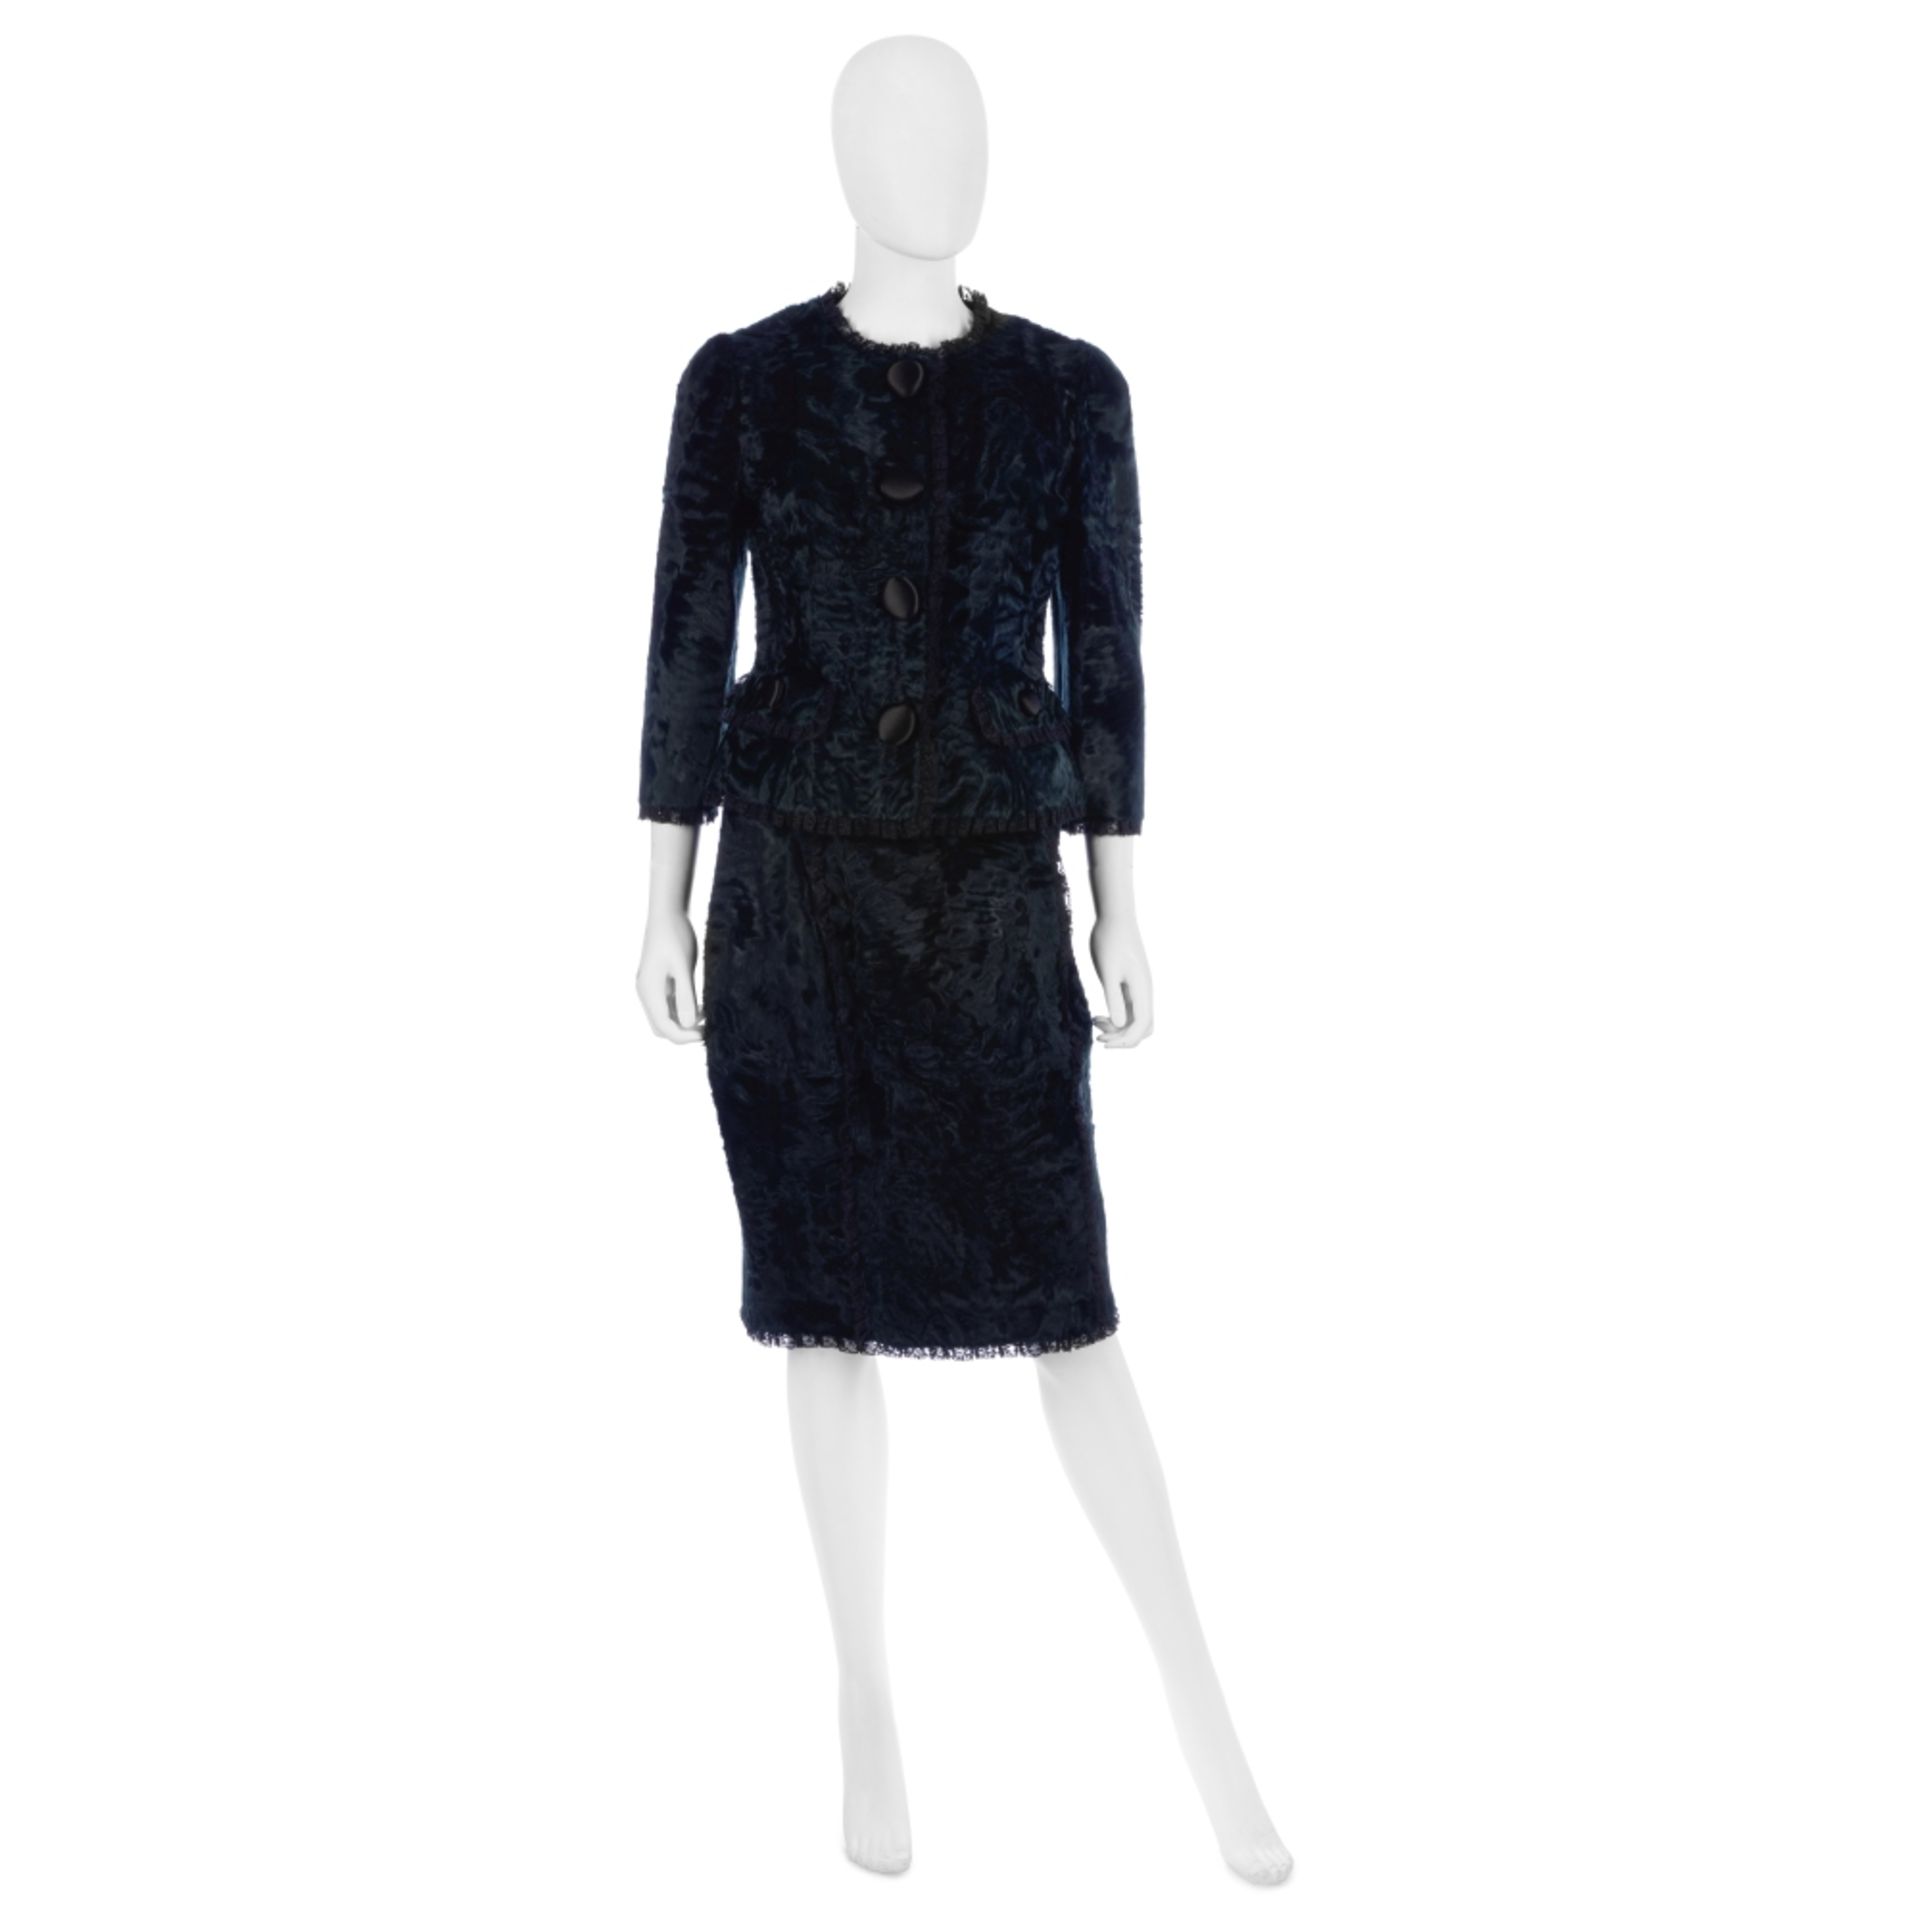 Dolce and Gabbana Alta Moda: a Petrol Blue Astrakhan Skirt Suit